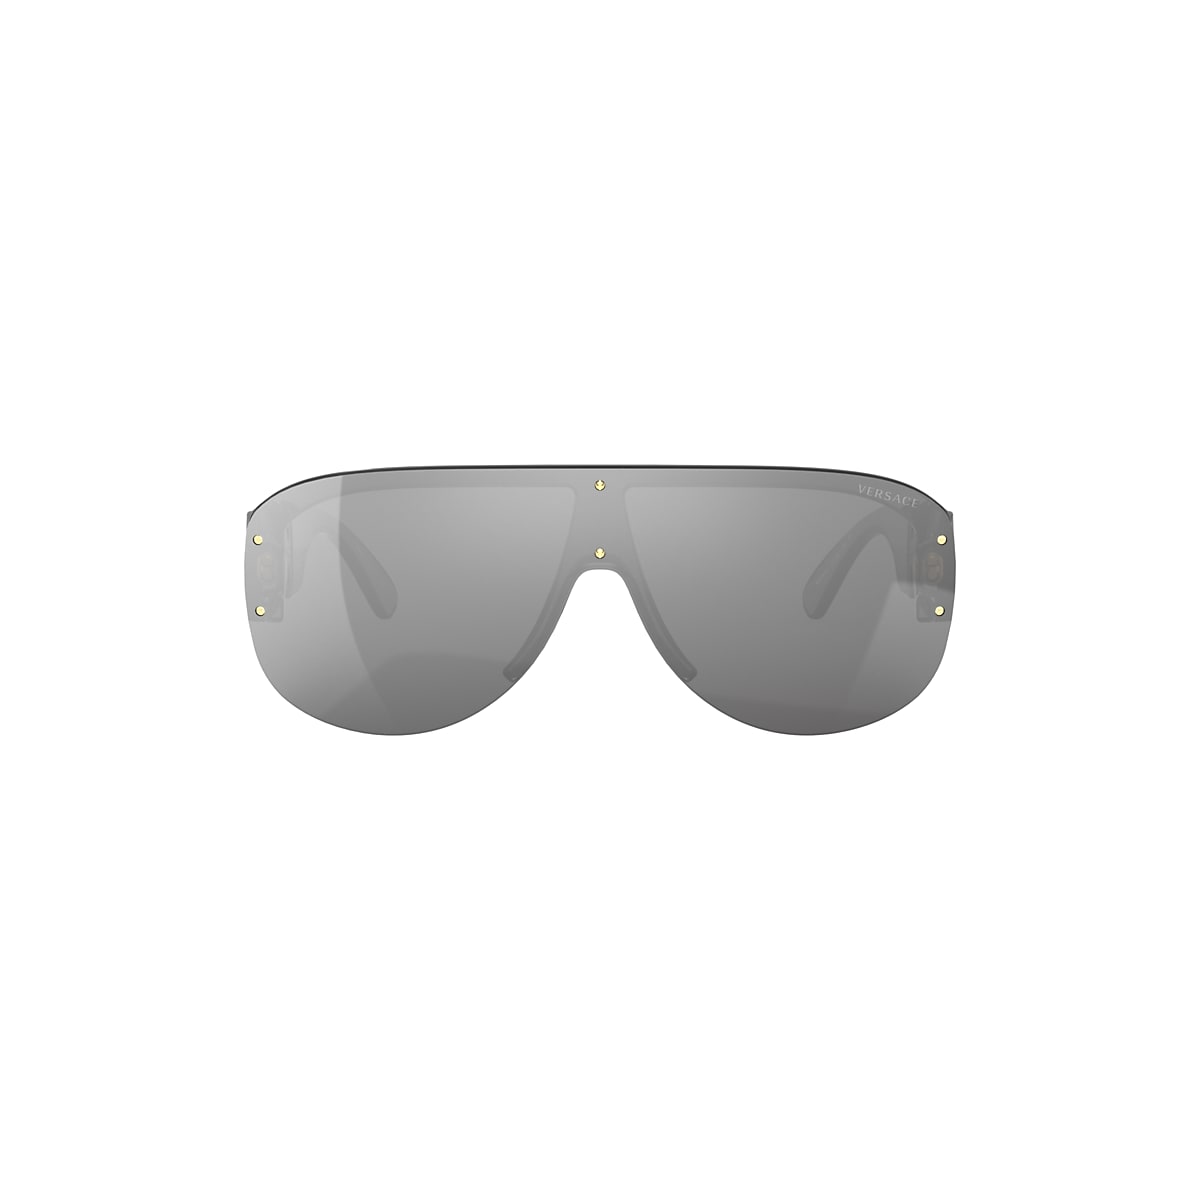 VERSACE VE4391 Transparent Grey - Men Luxury Sunglasses, Light Grey Mirror Silver Lens